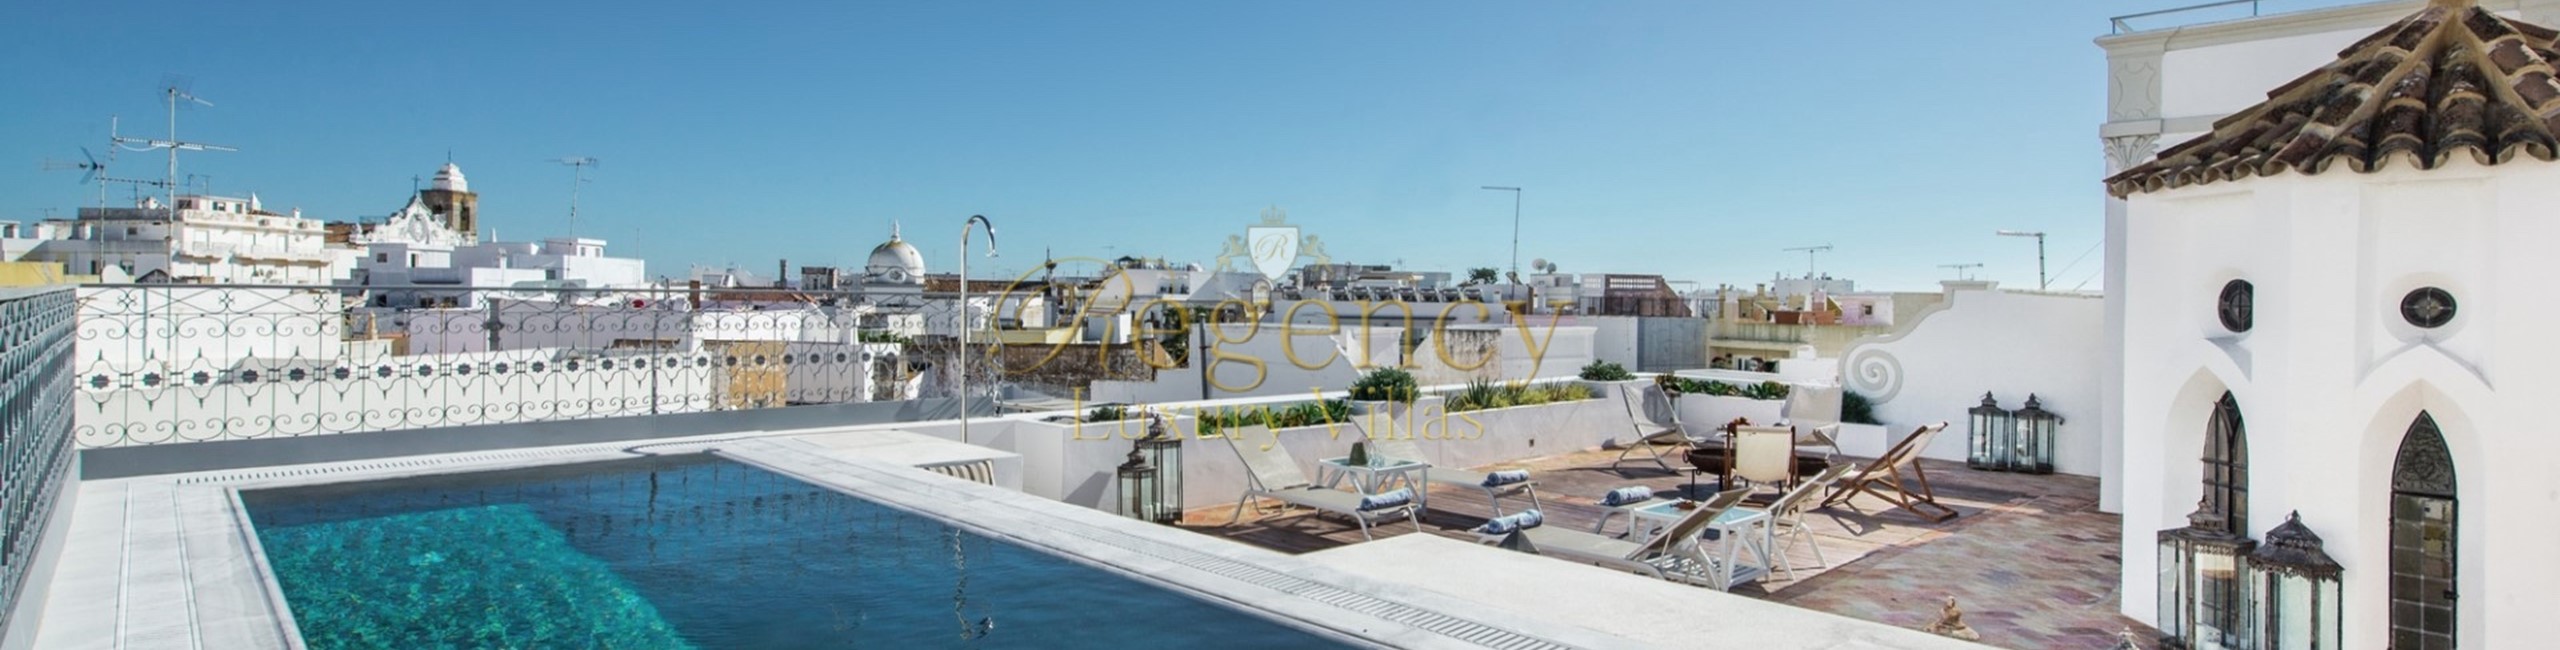 12 Bedrooms Luxury Villa To Rent In The Algarve Beach Front Pinhal Velho Olhao Portugal Luxury Villa Rental Portugal Villa Black Opal Regency Luxury Villas3